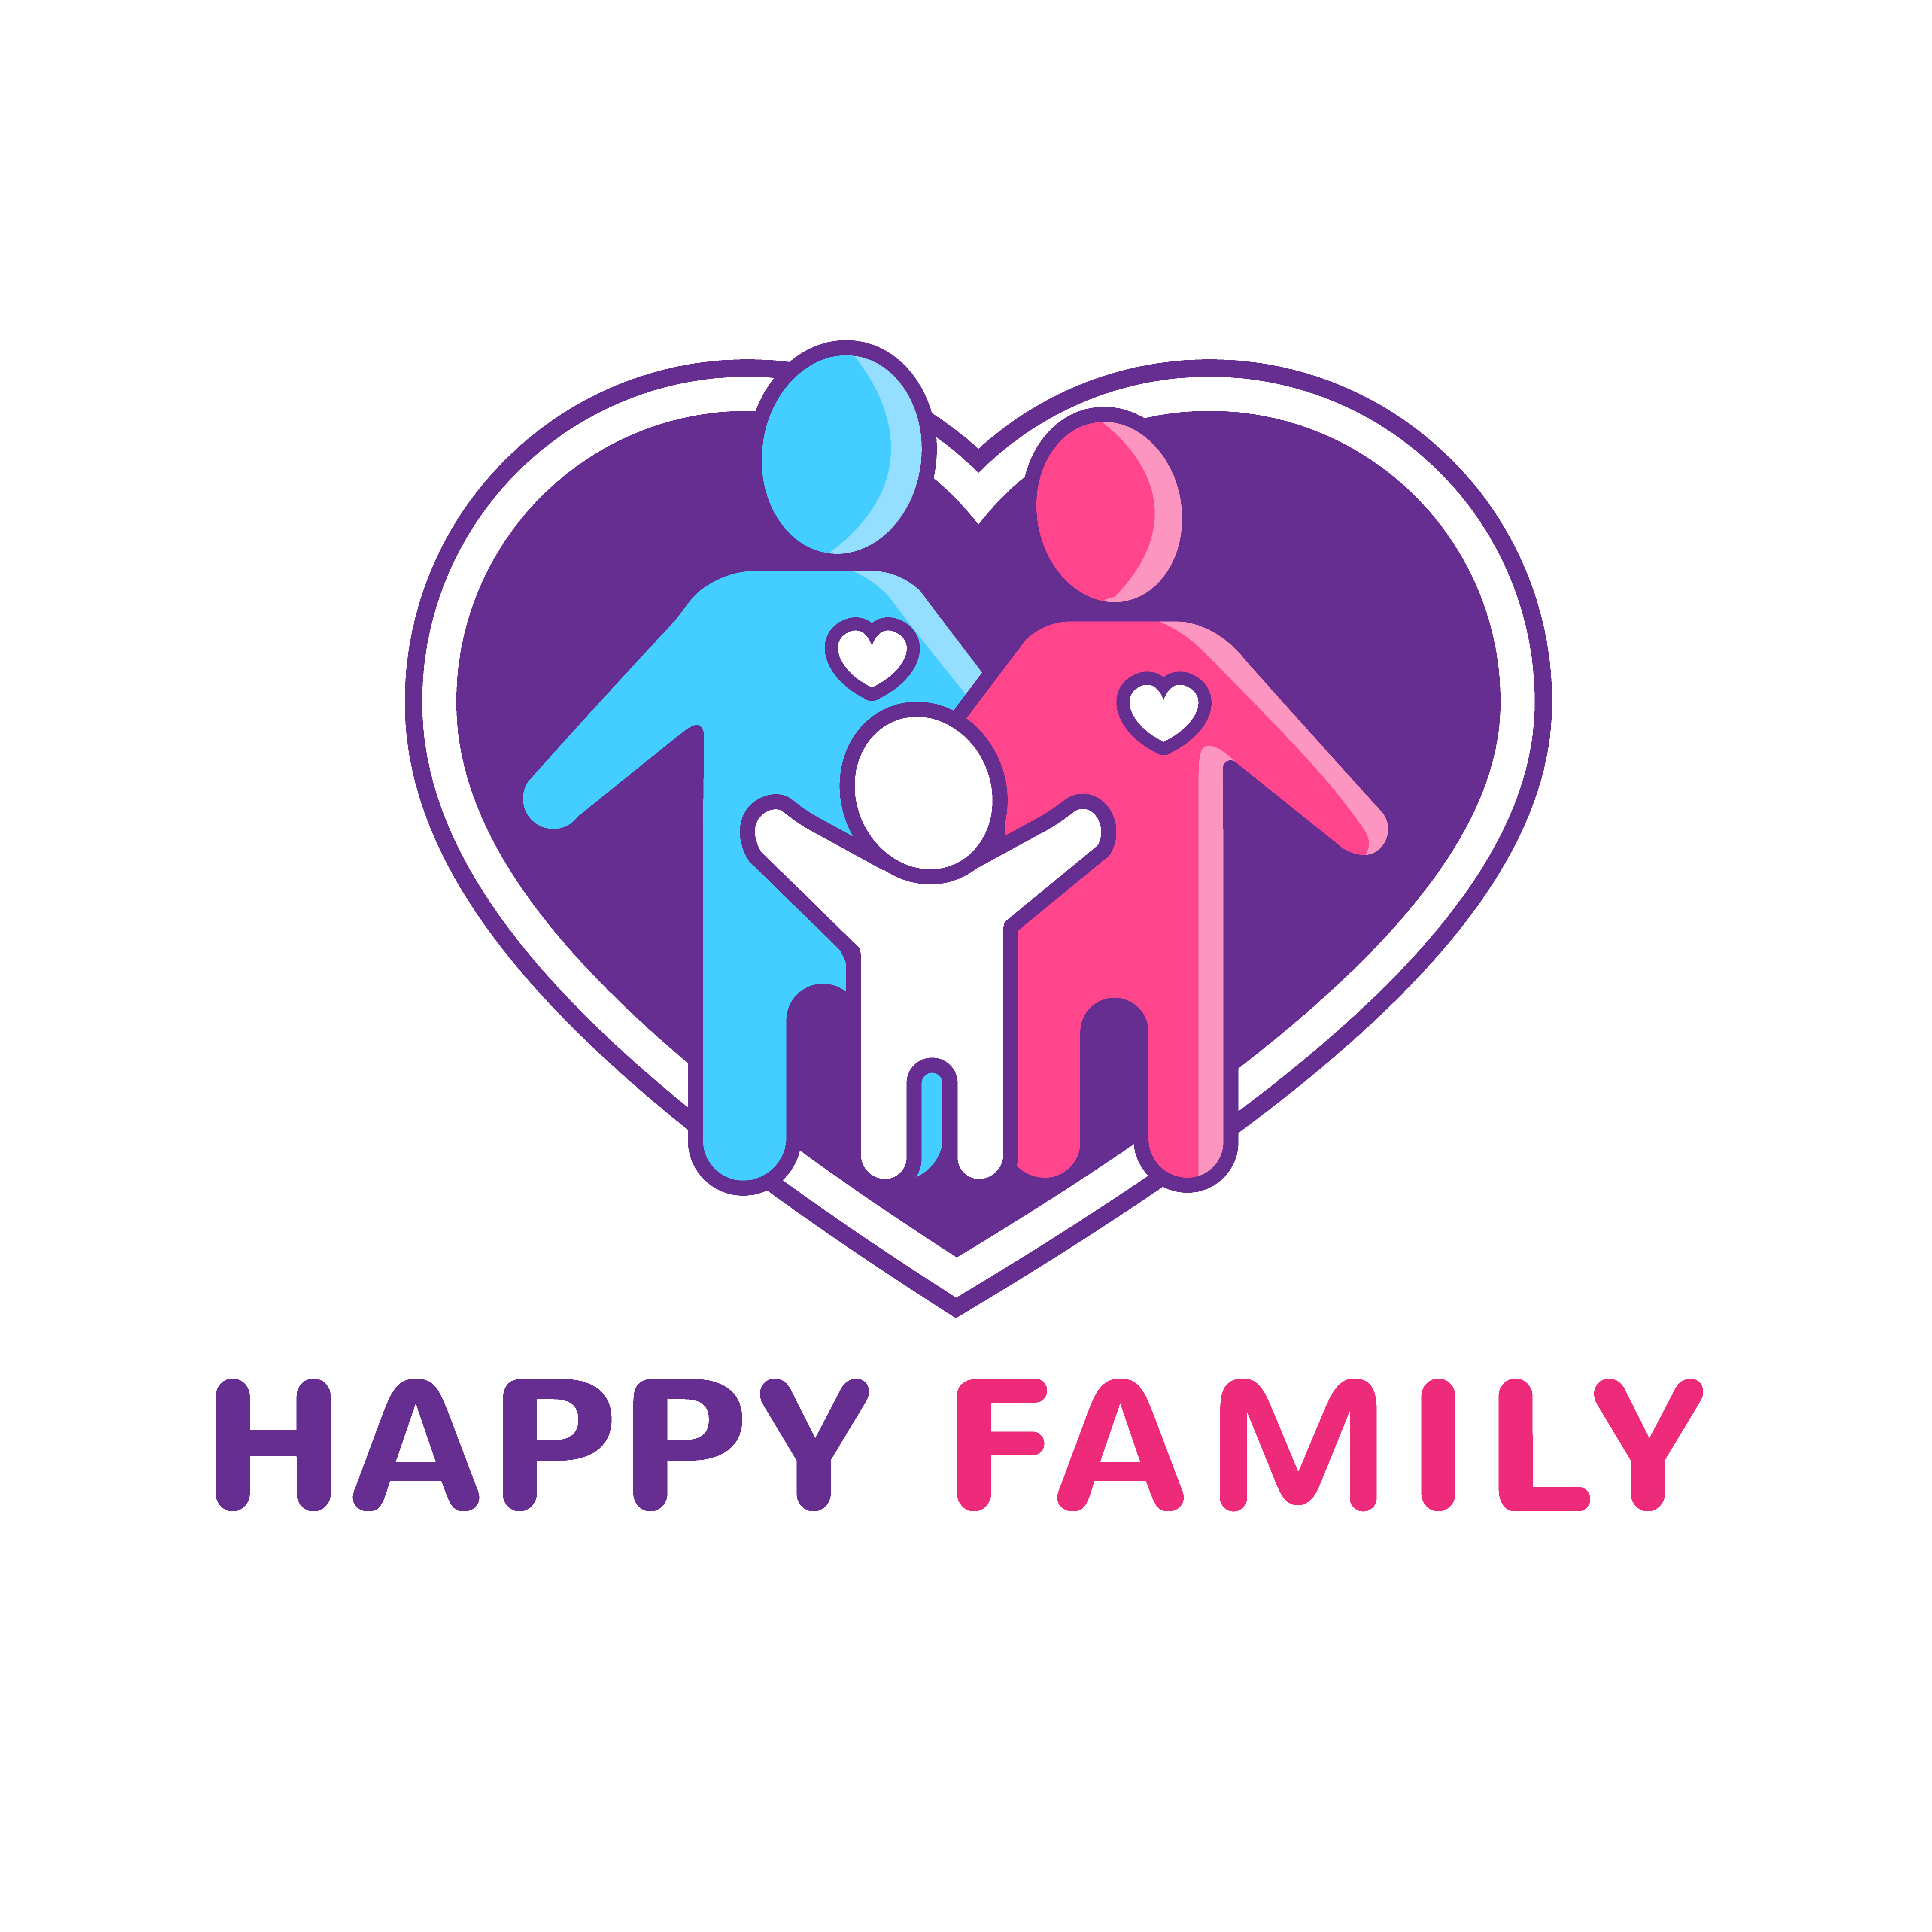 Download Family Logo Illustration 468245 Vector Art at Vecteezy